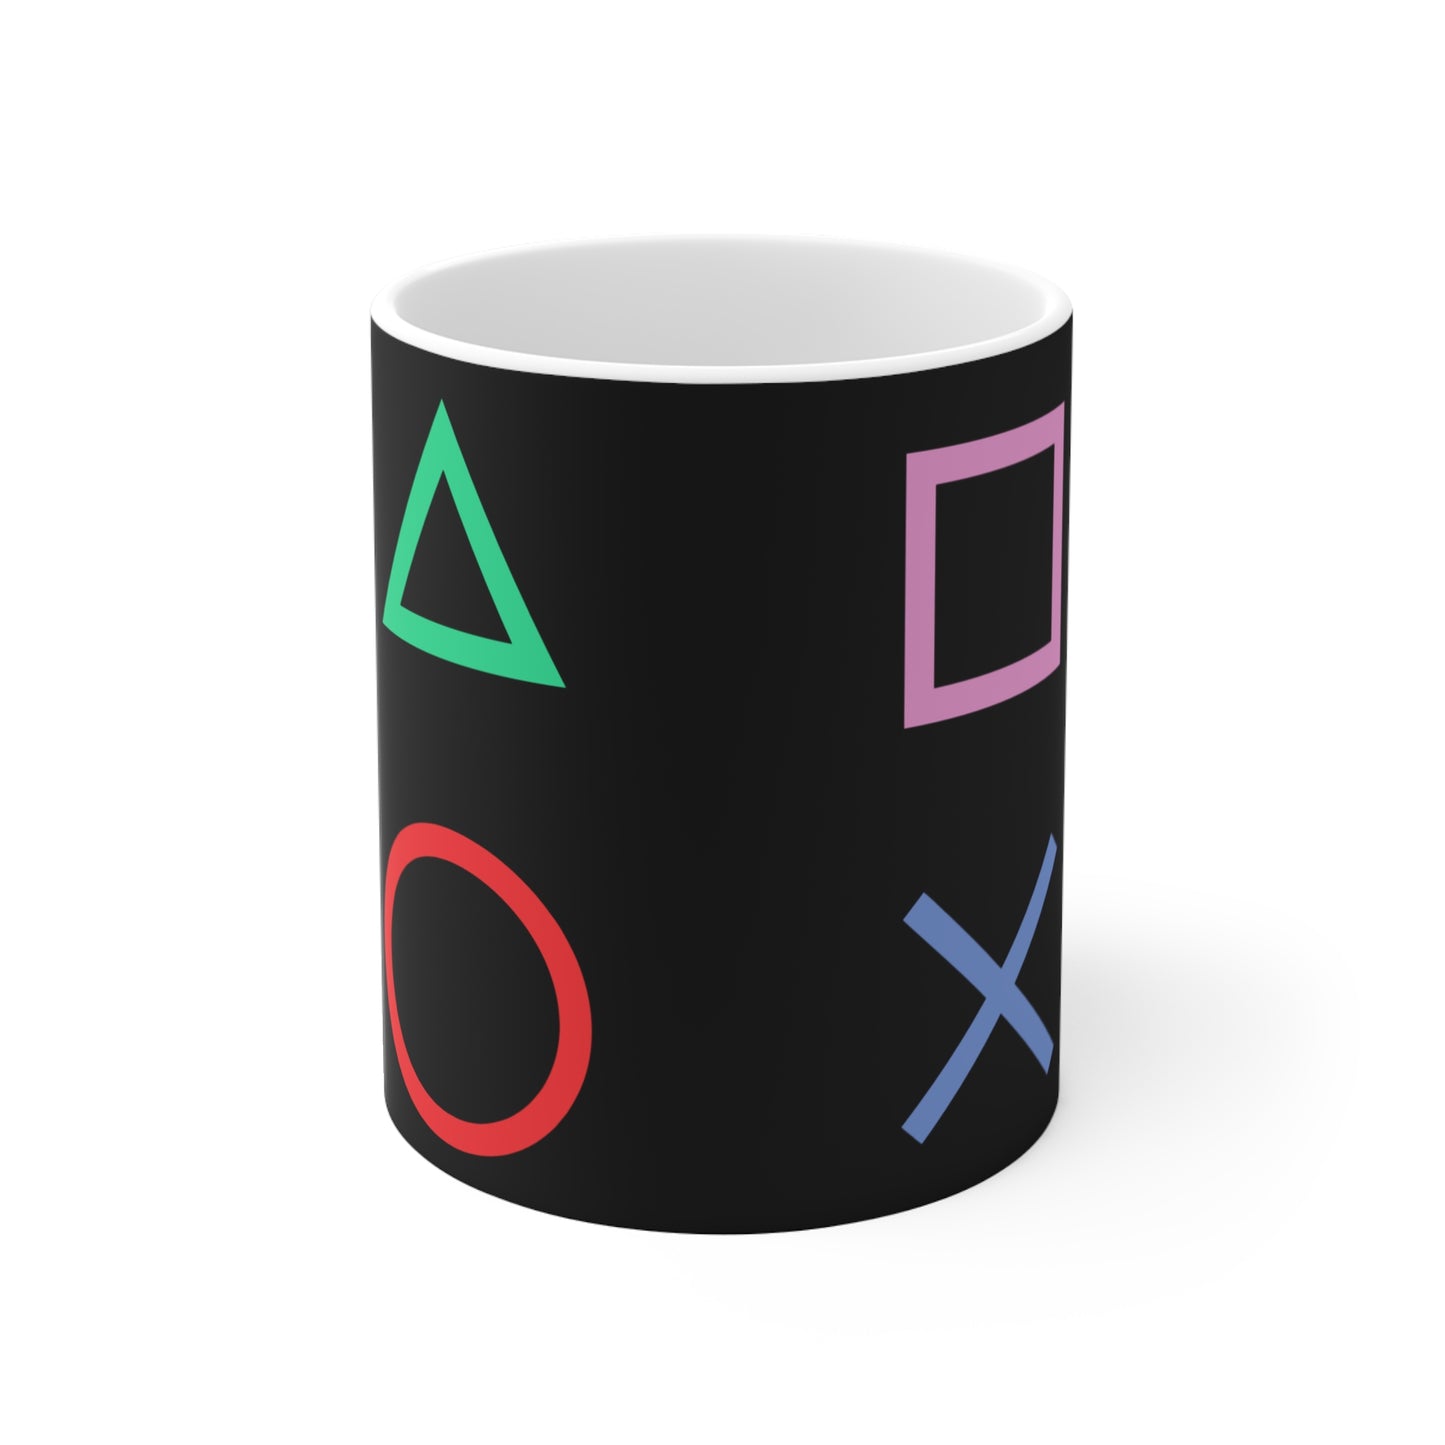 Mug with custom design 11oz, Cup for video game lovers, gamer Mug, gaming mug (Playstation buttons)